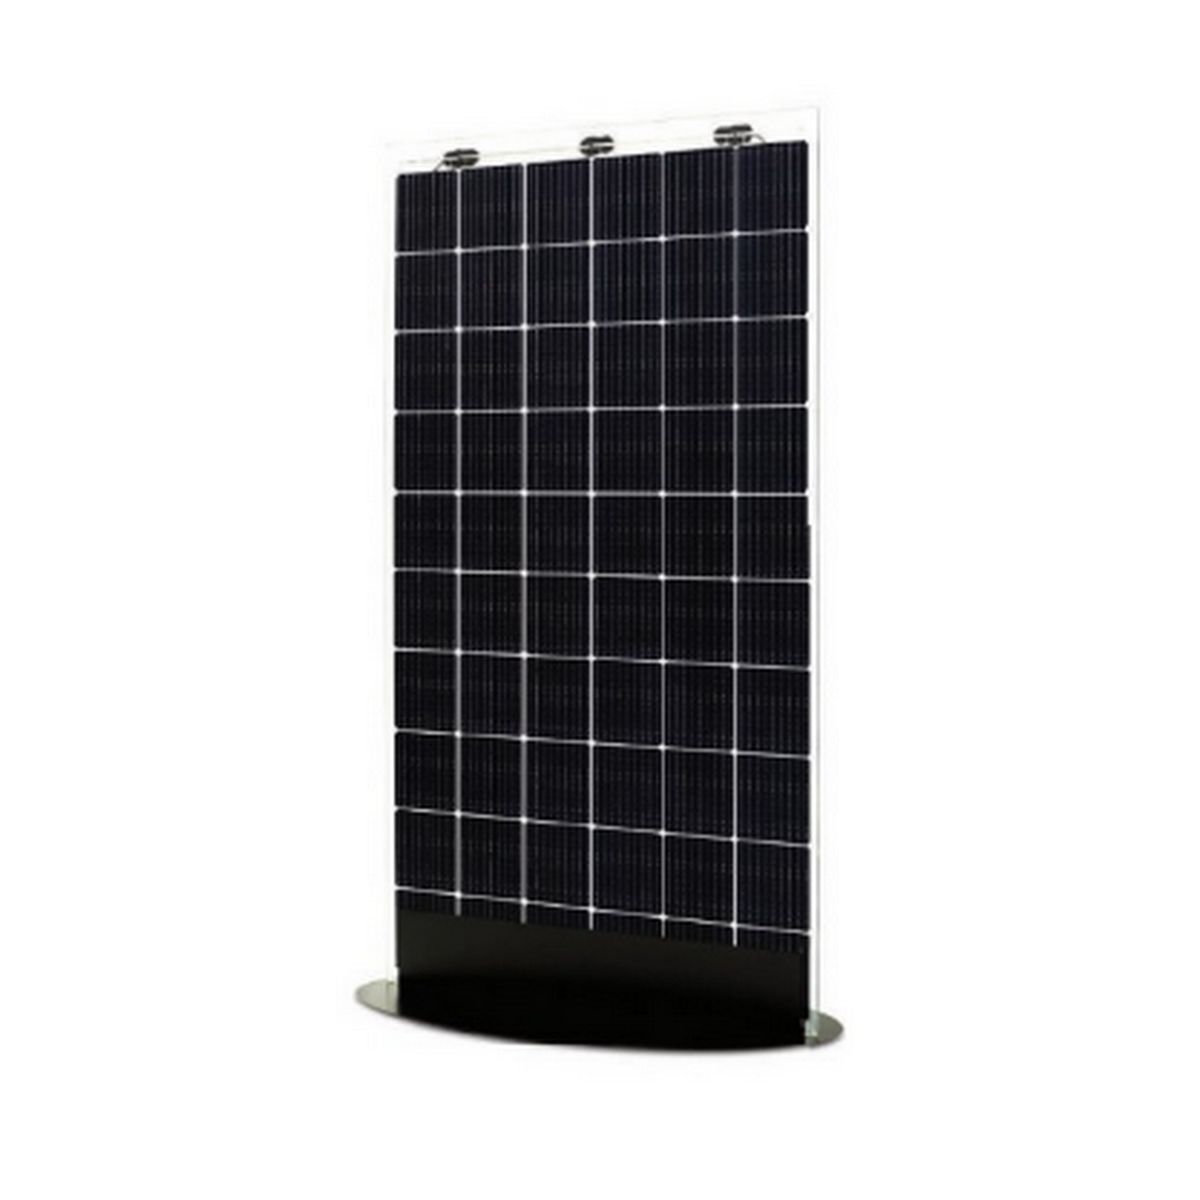 Solitek solar module SOLID 370W frameless glass-glass bifacial Full Black